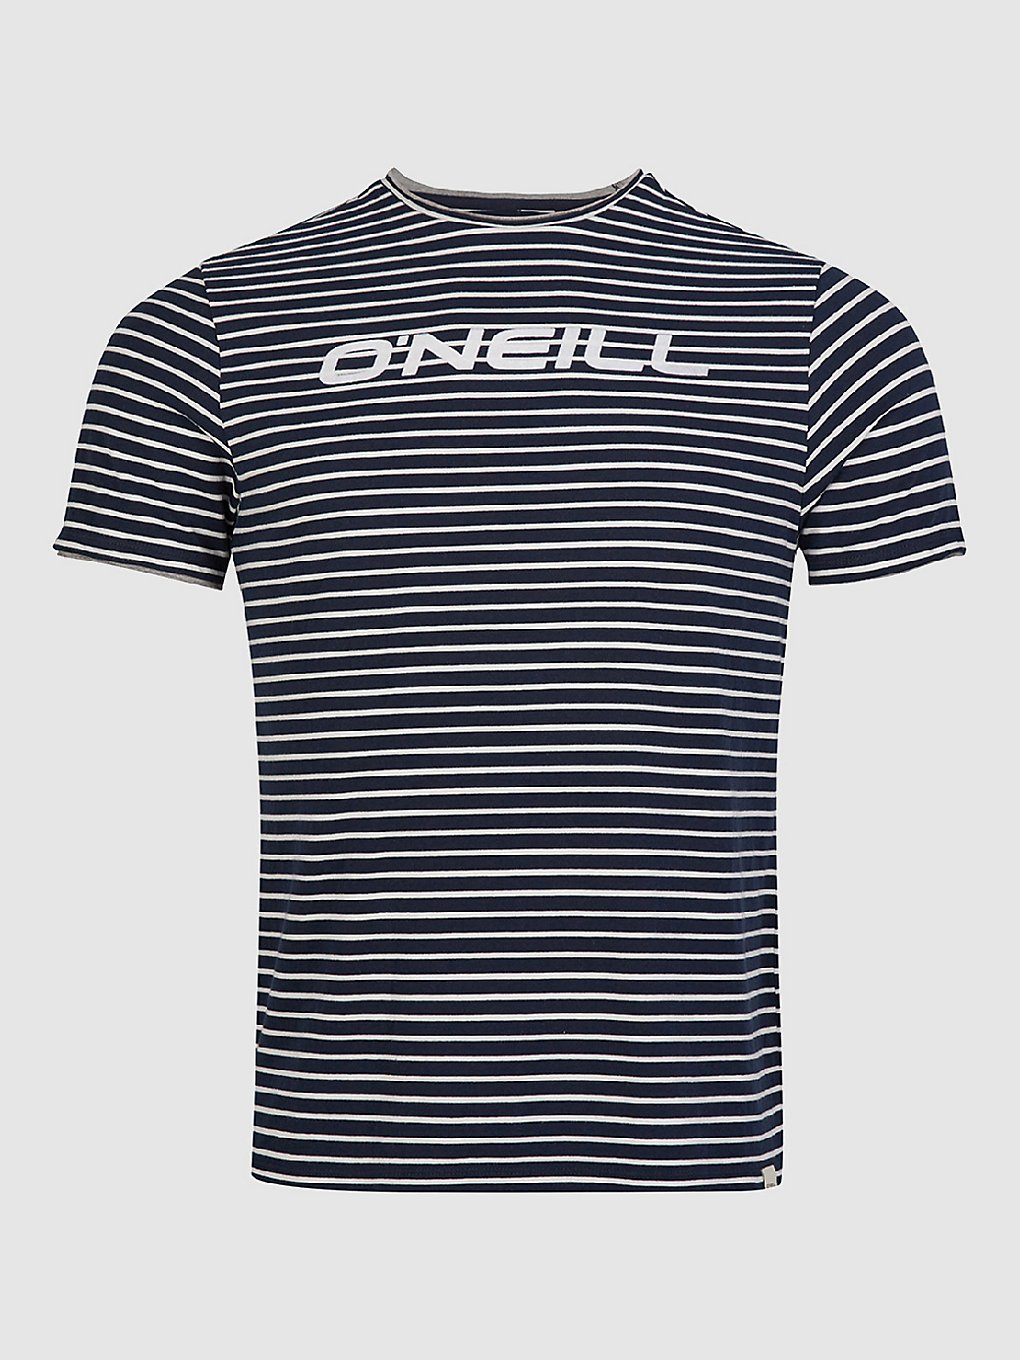 O'Neill Ahoy T-Shirt ink blue kaufen